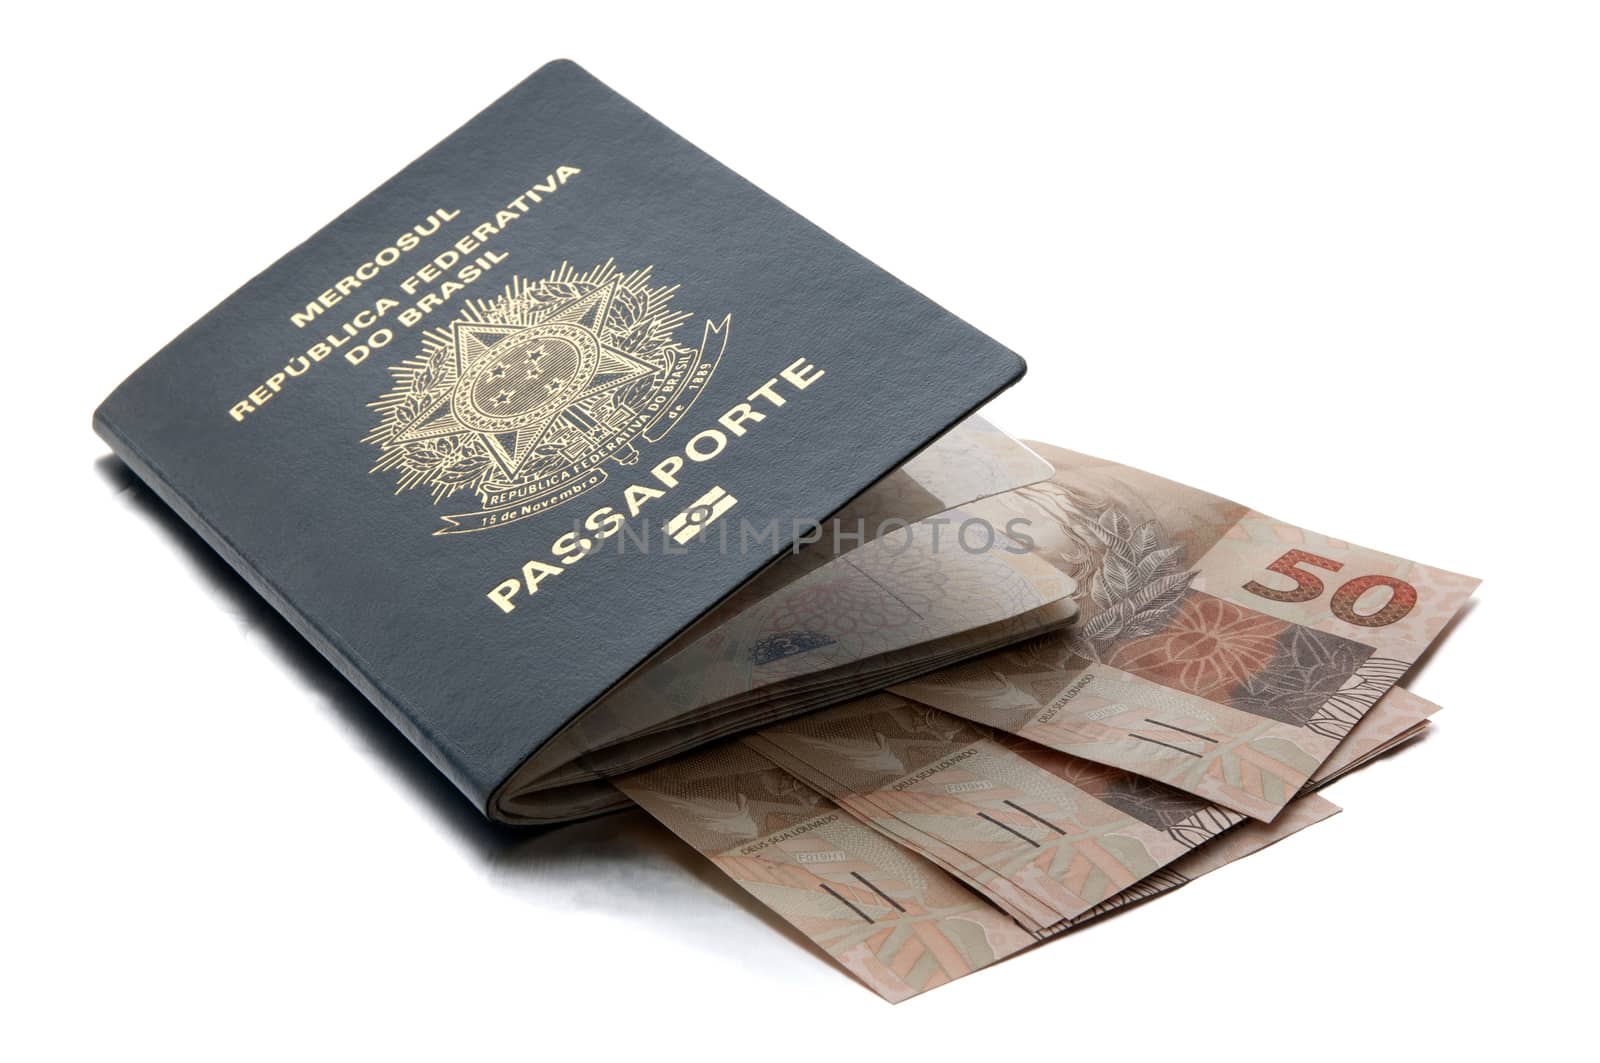 Brazilian passport and brazilian currency (Real) by rodrigobellizzi